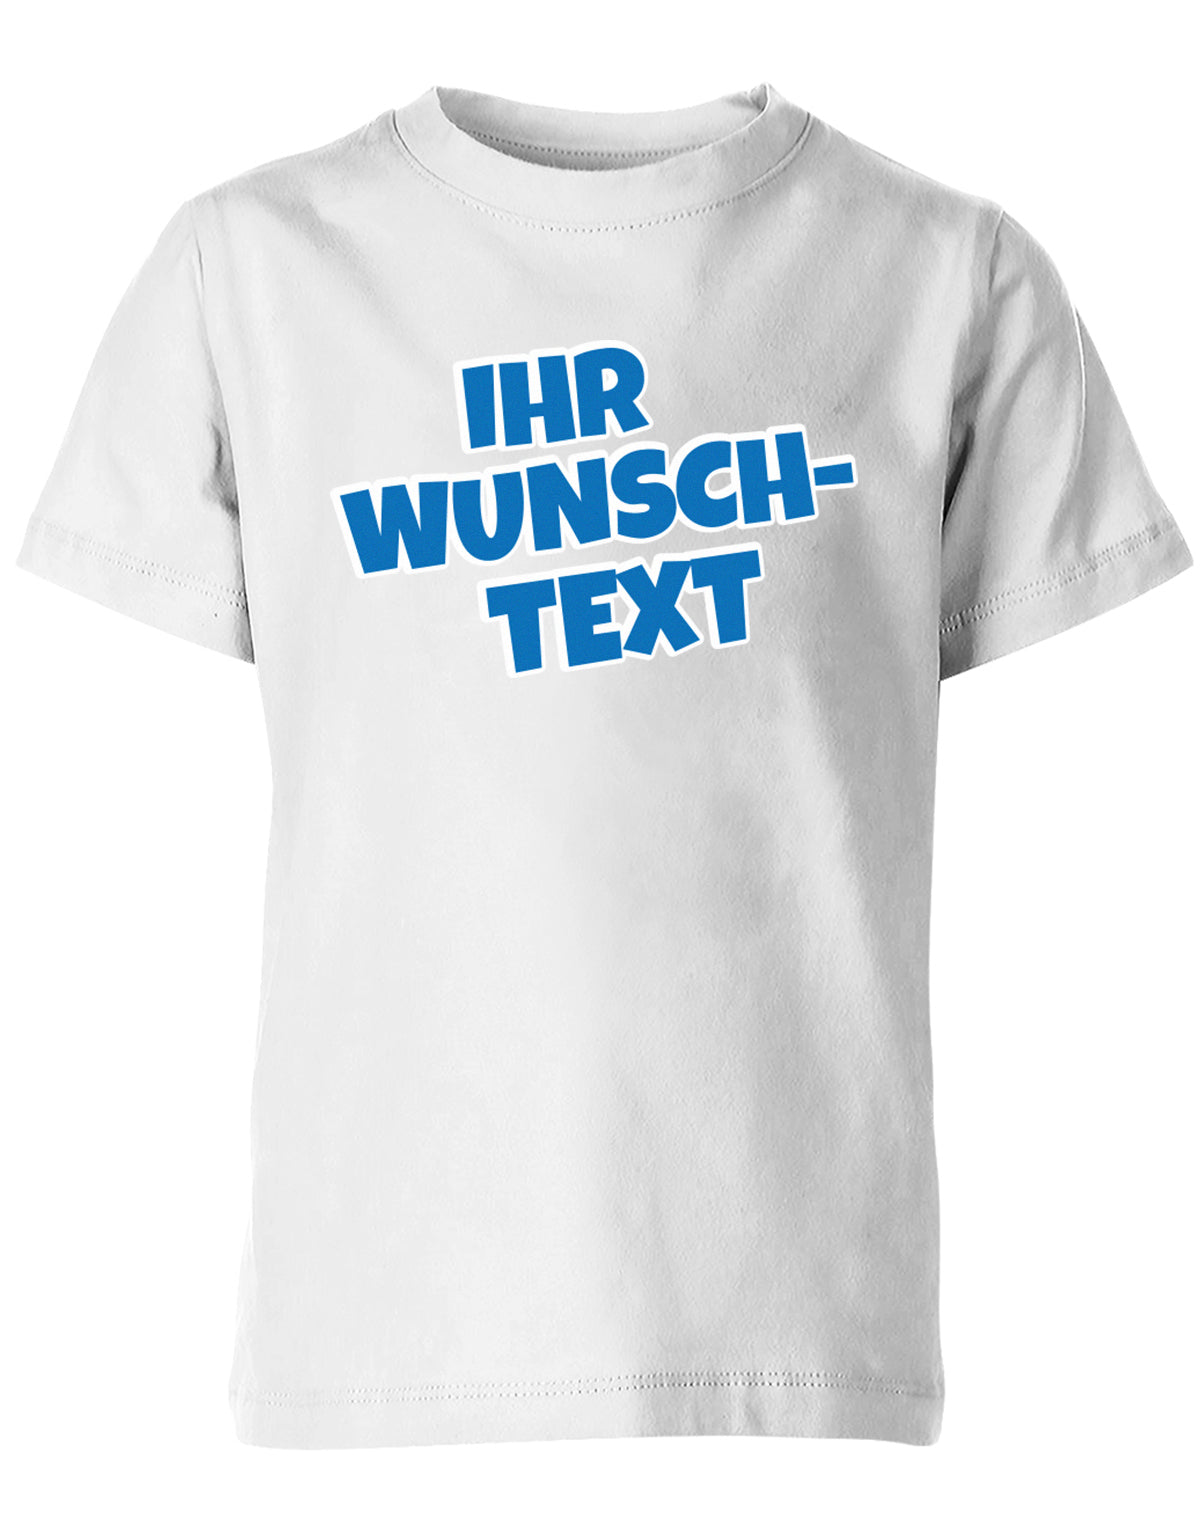 Kinder Tshirt mit Wunschtext.  Comic Schriftart mit weißer Umrandung.  Weiss